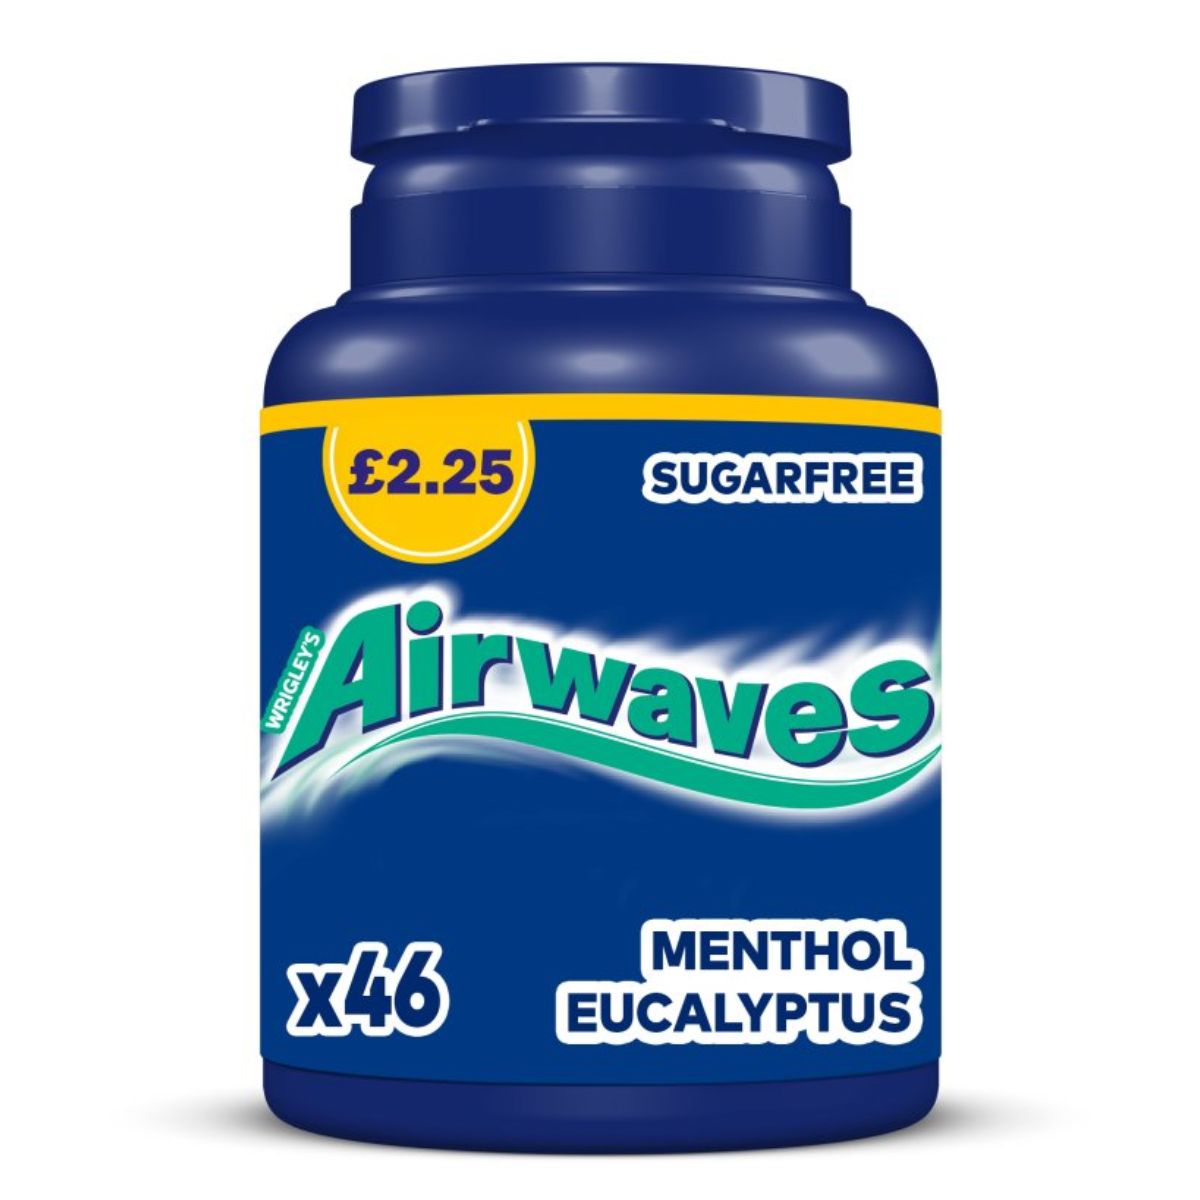 Airwaves - Menthol & Eucalyptus Sugarfree Chewing Gum Bottle - 46pcs, 60 capsules.